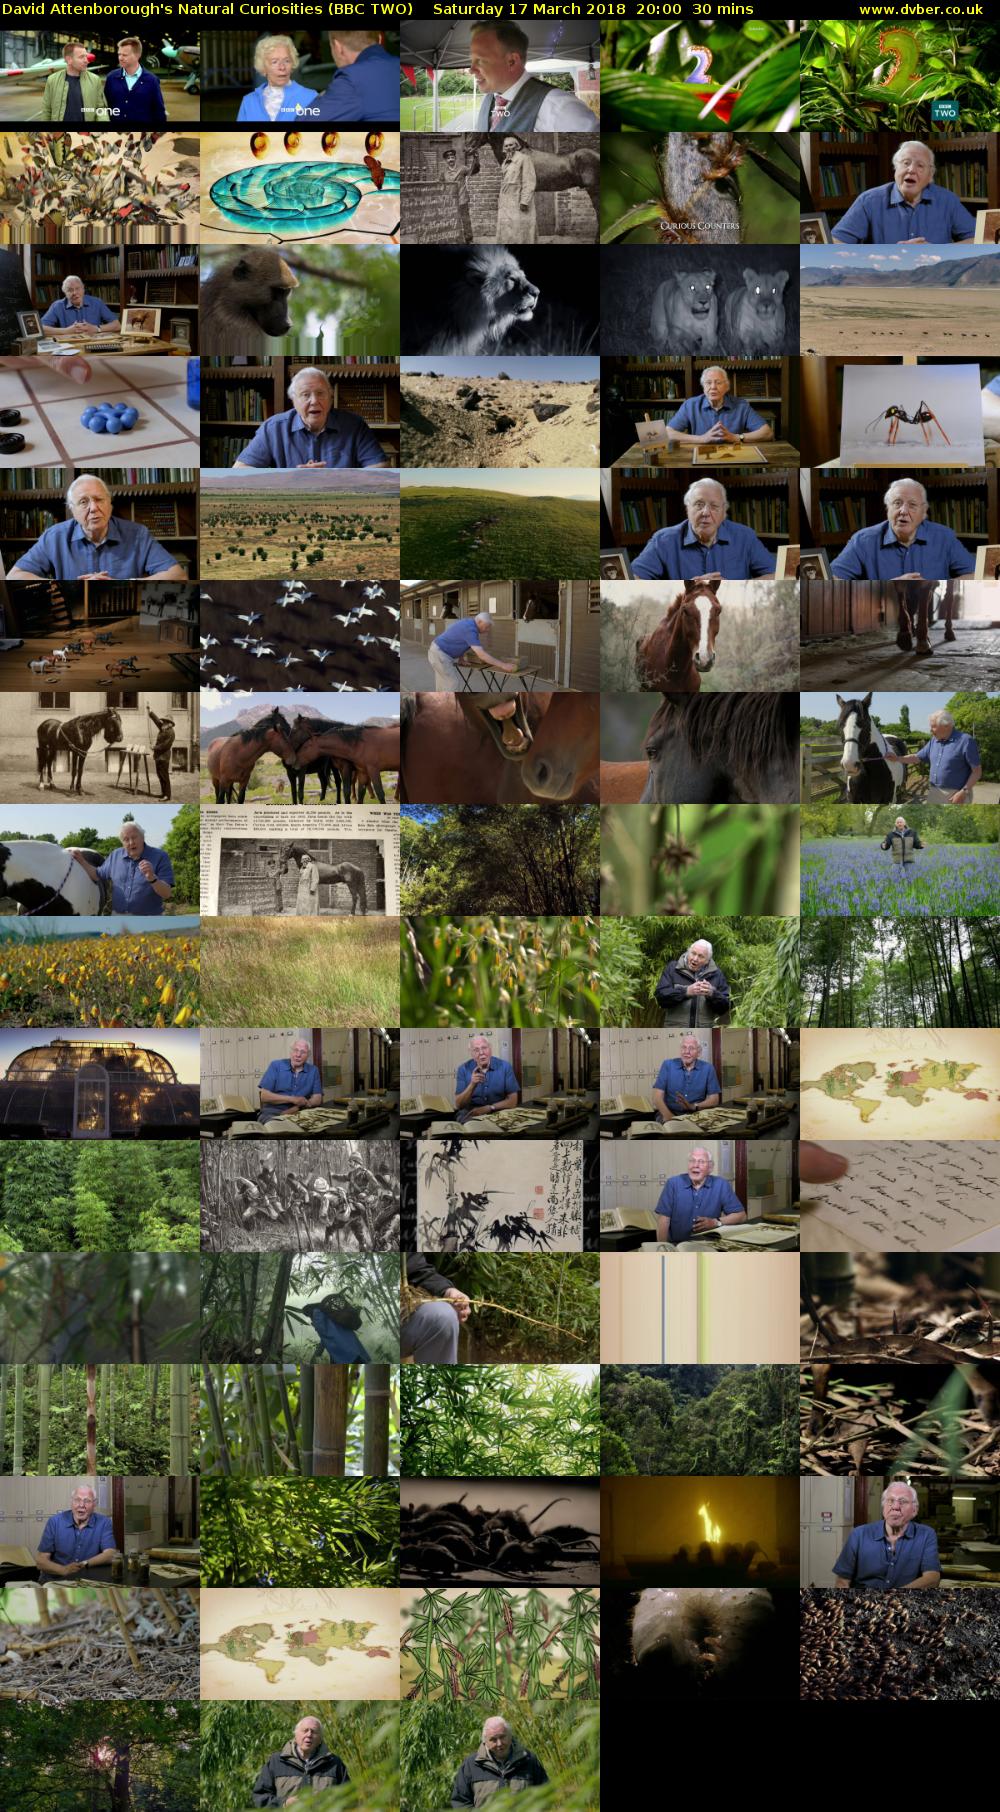 David Attenborough's Natural Curiosities (BBC TWO) Saturday 17 March 2018 20:00 - 20:30